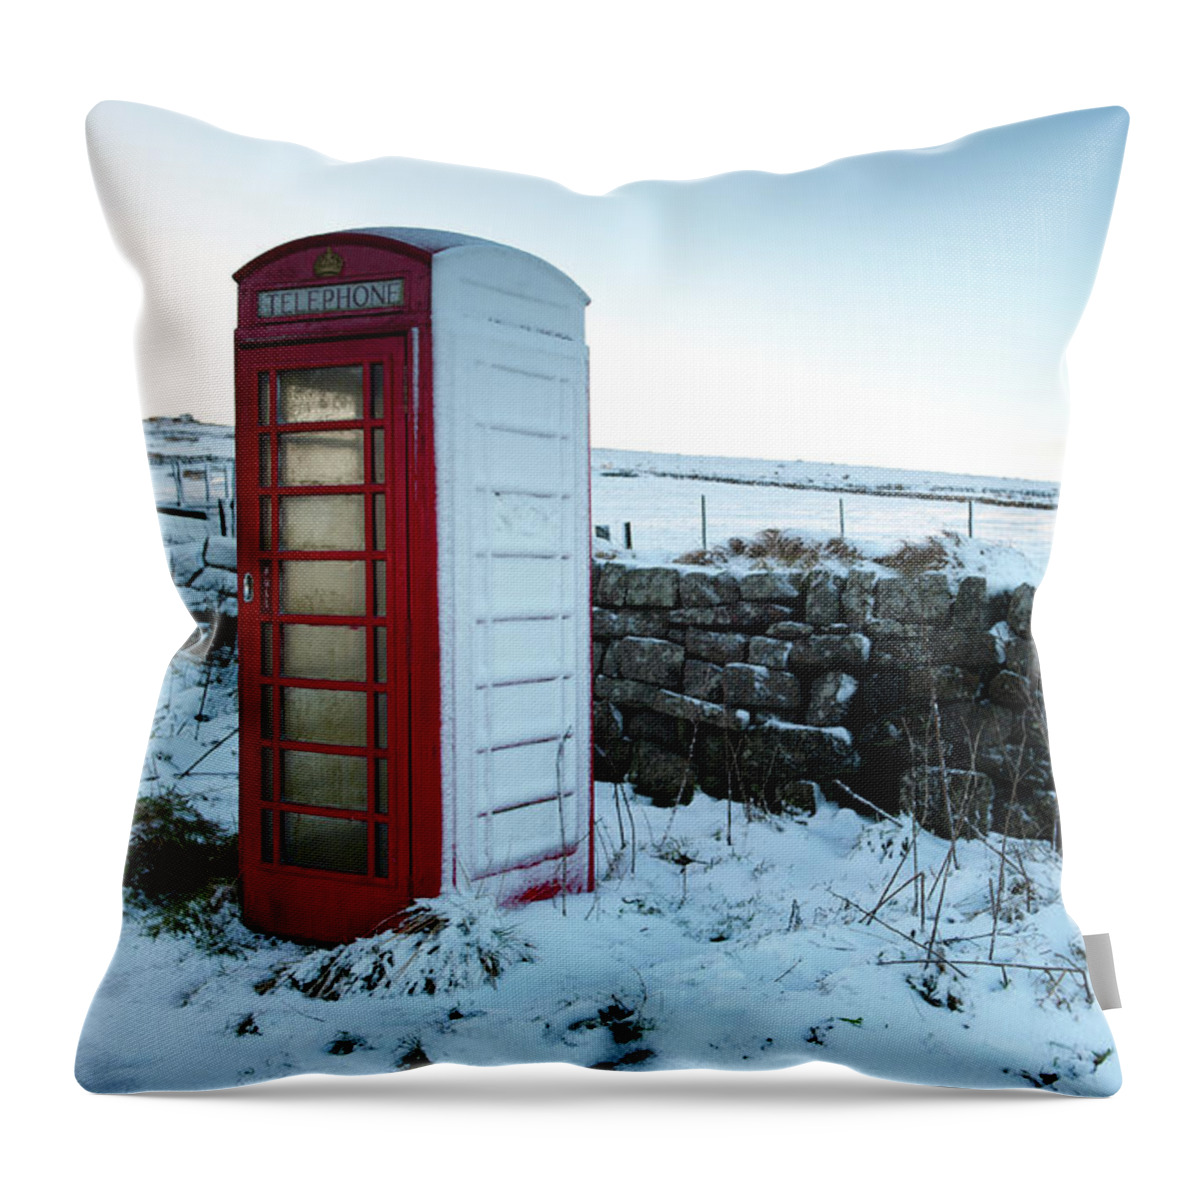 Helen Northcott Throw Pillow featuring the photograph Snowy Telephone Box by Helen Jackson